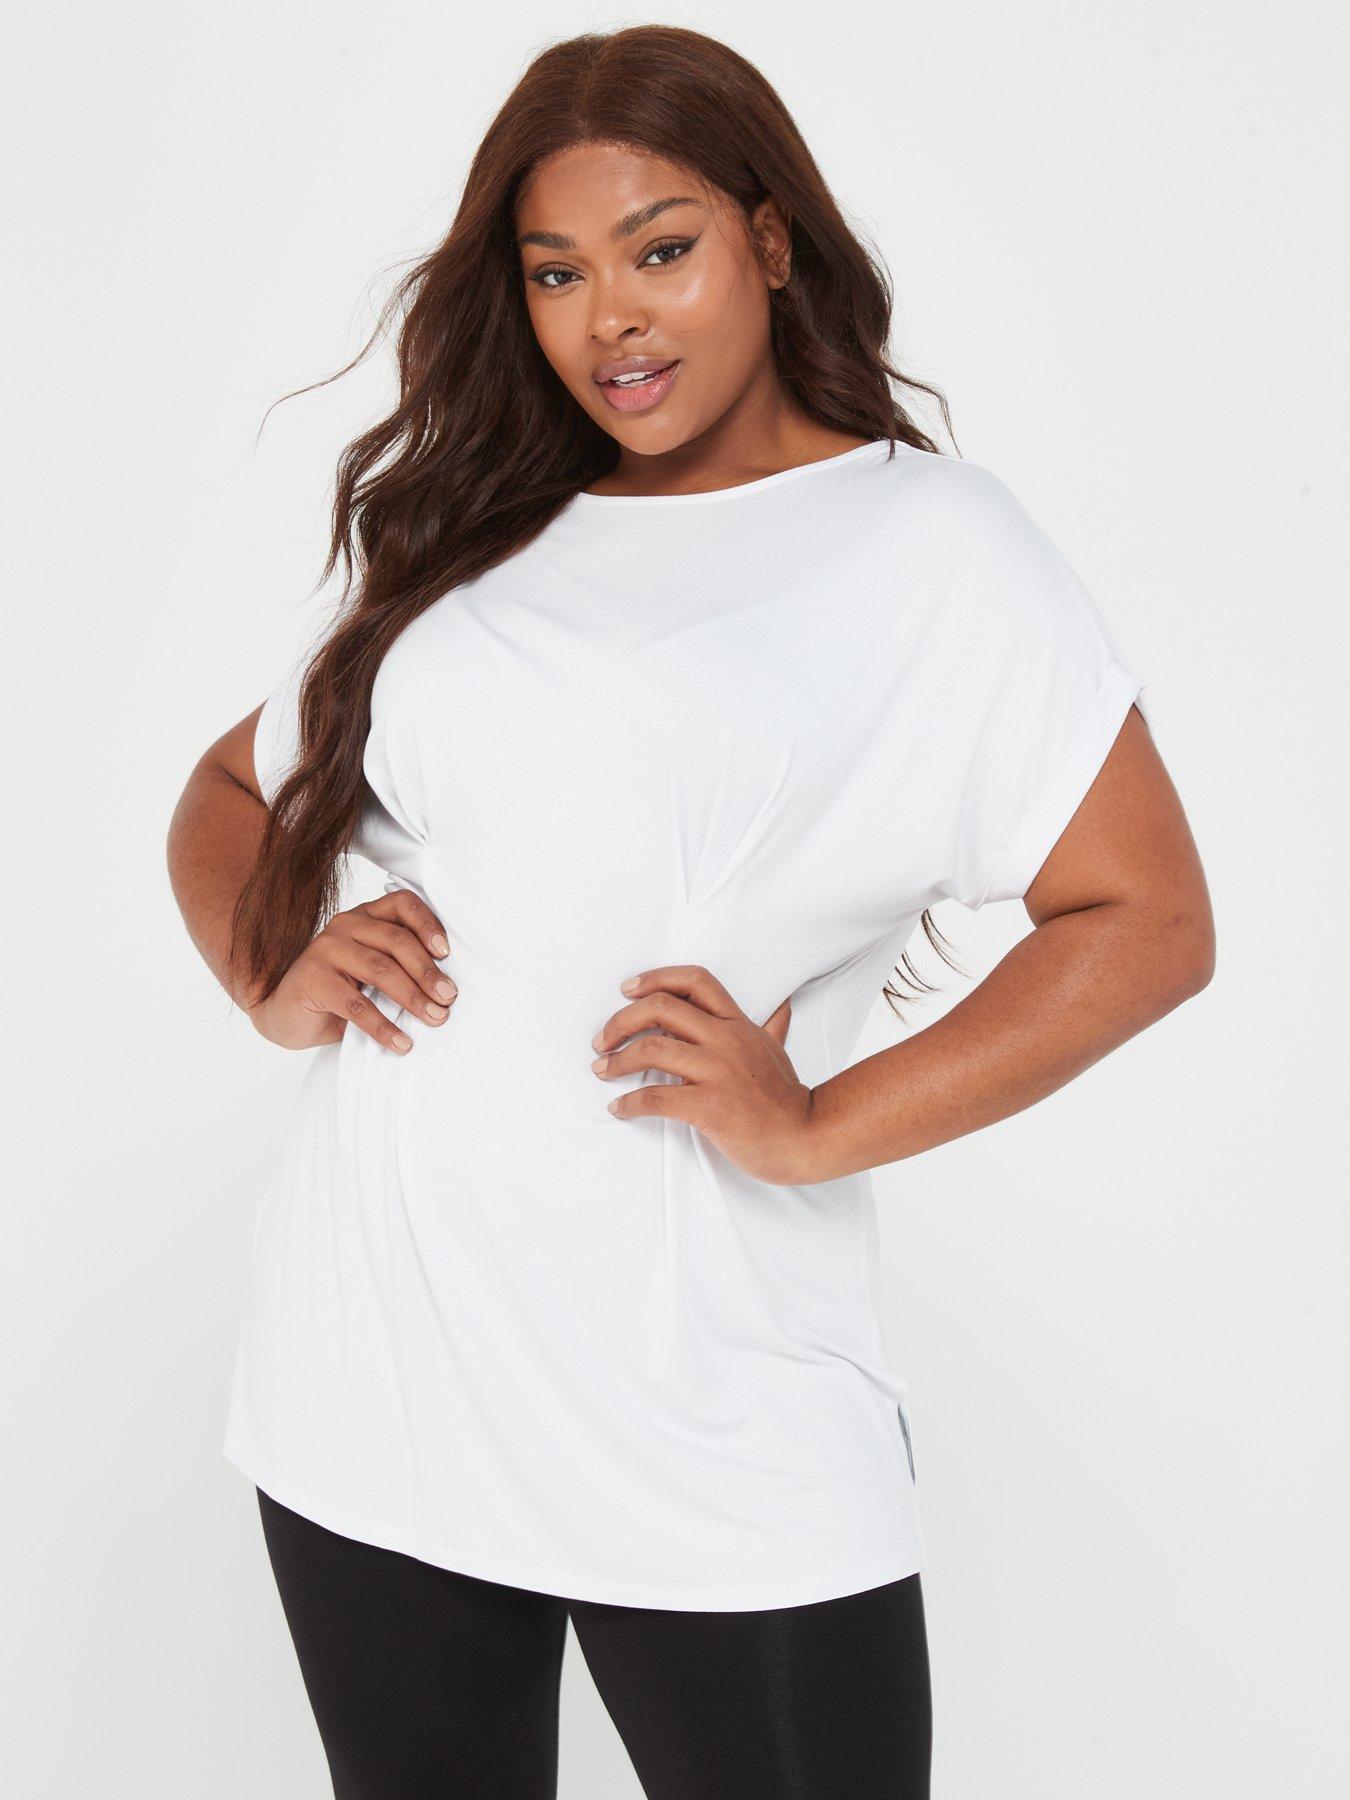 Pintuck Detail Longline Blouse White, Tops & T-shirts